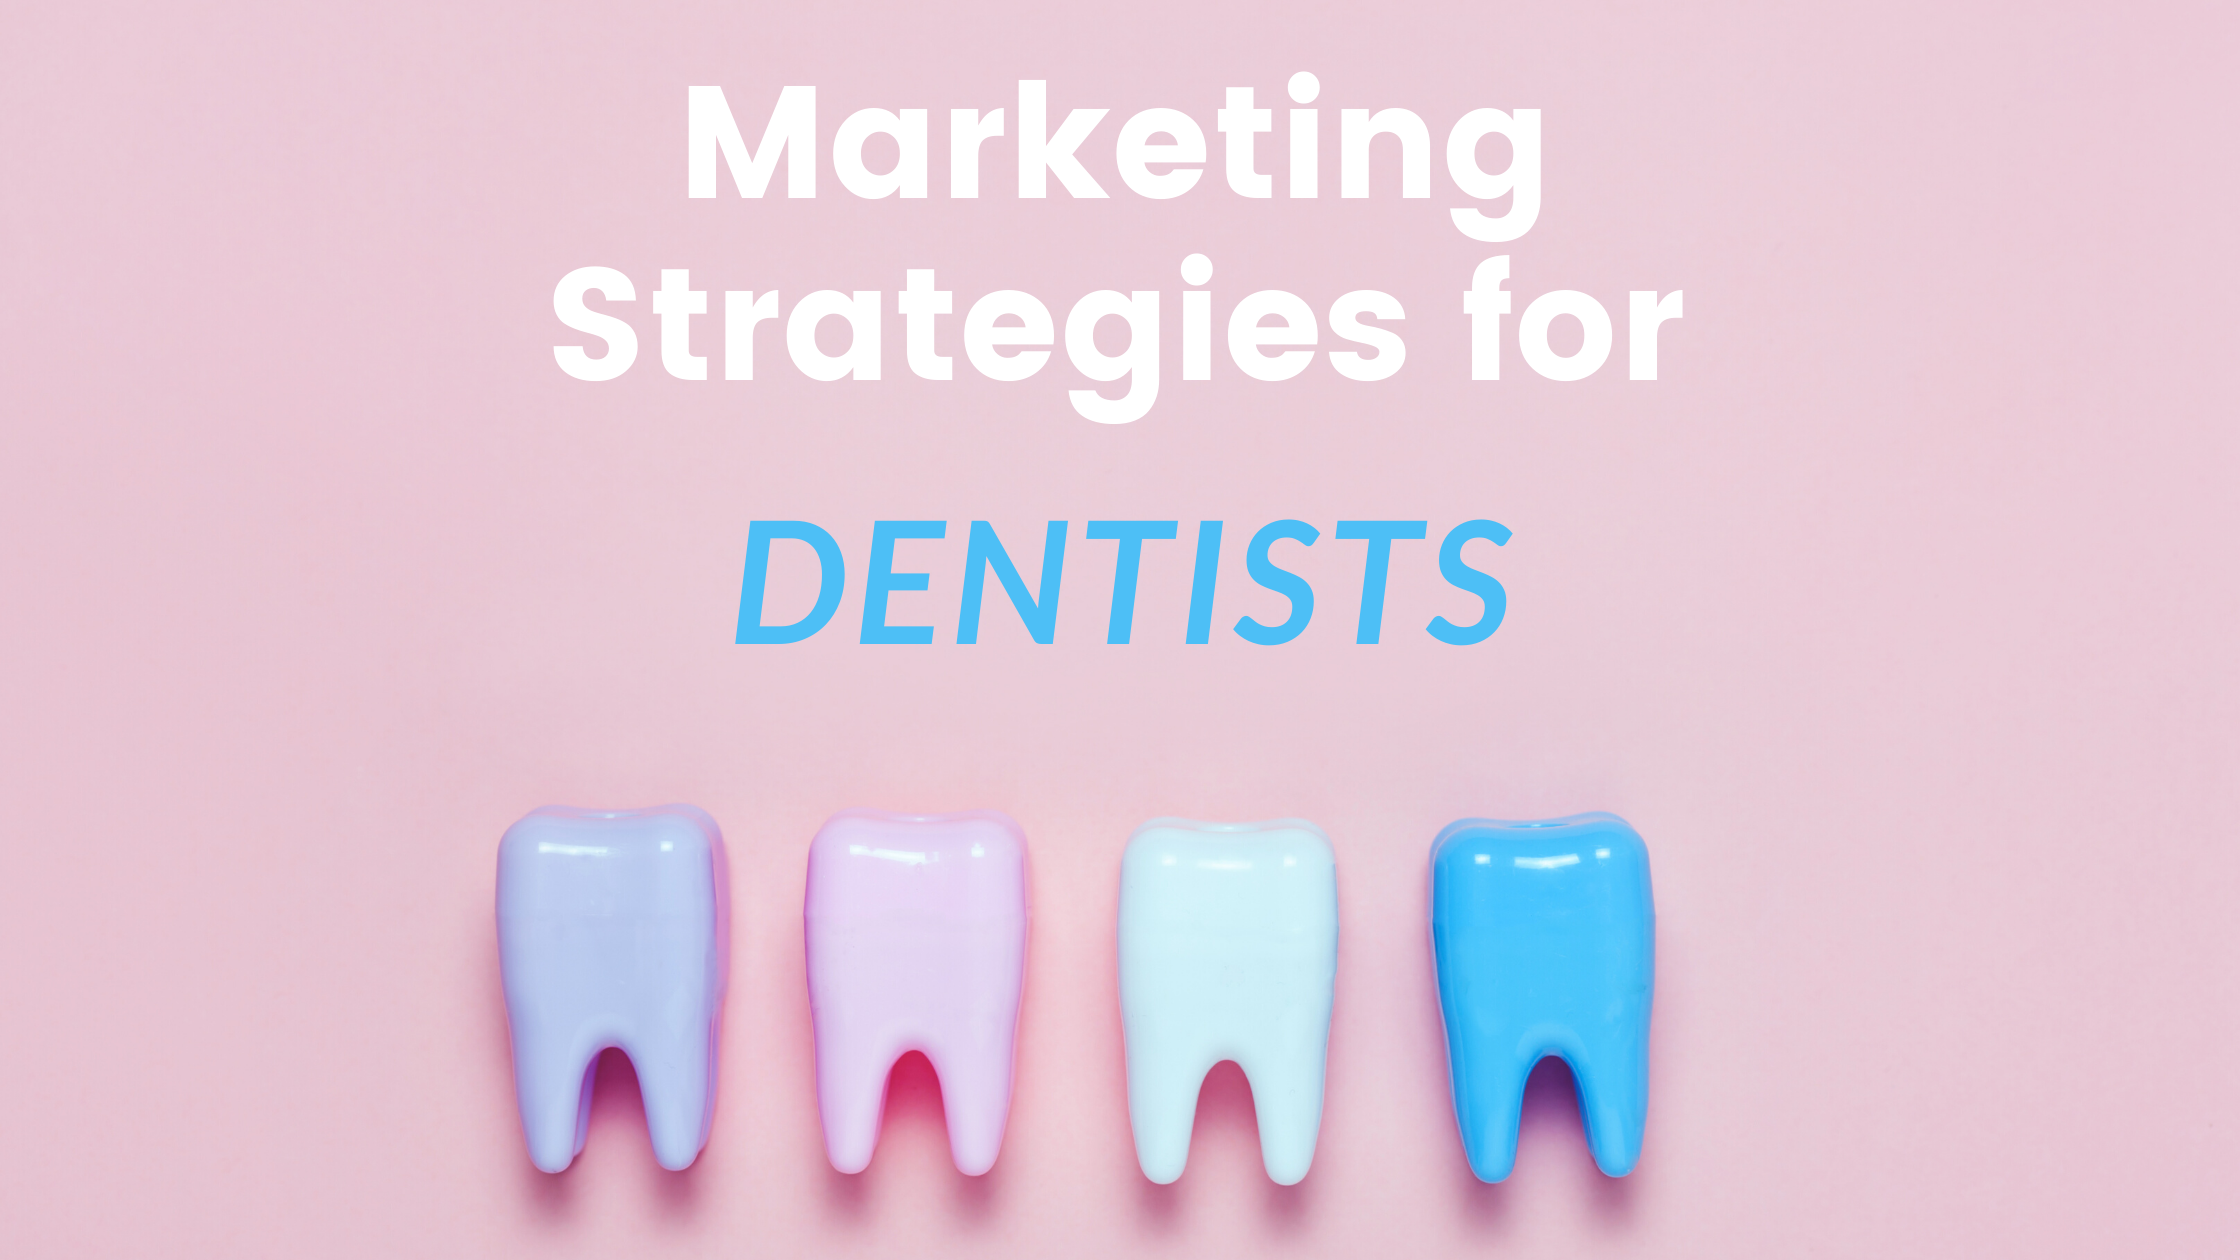 Dental Marketing Strategies - Top Marketing Methods to Get New Patients